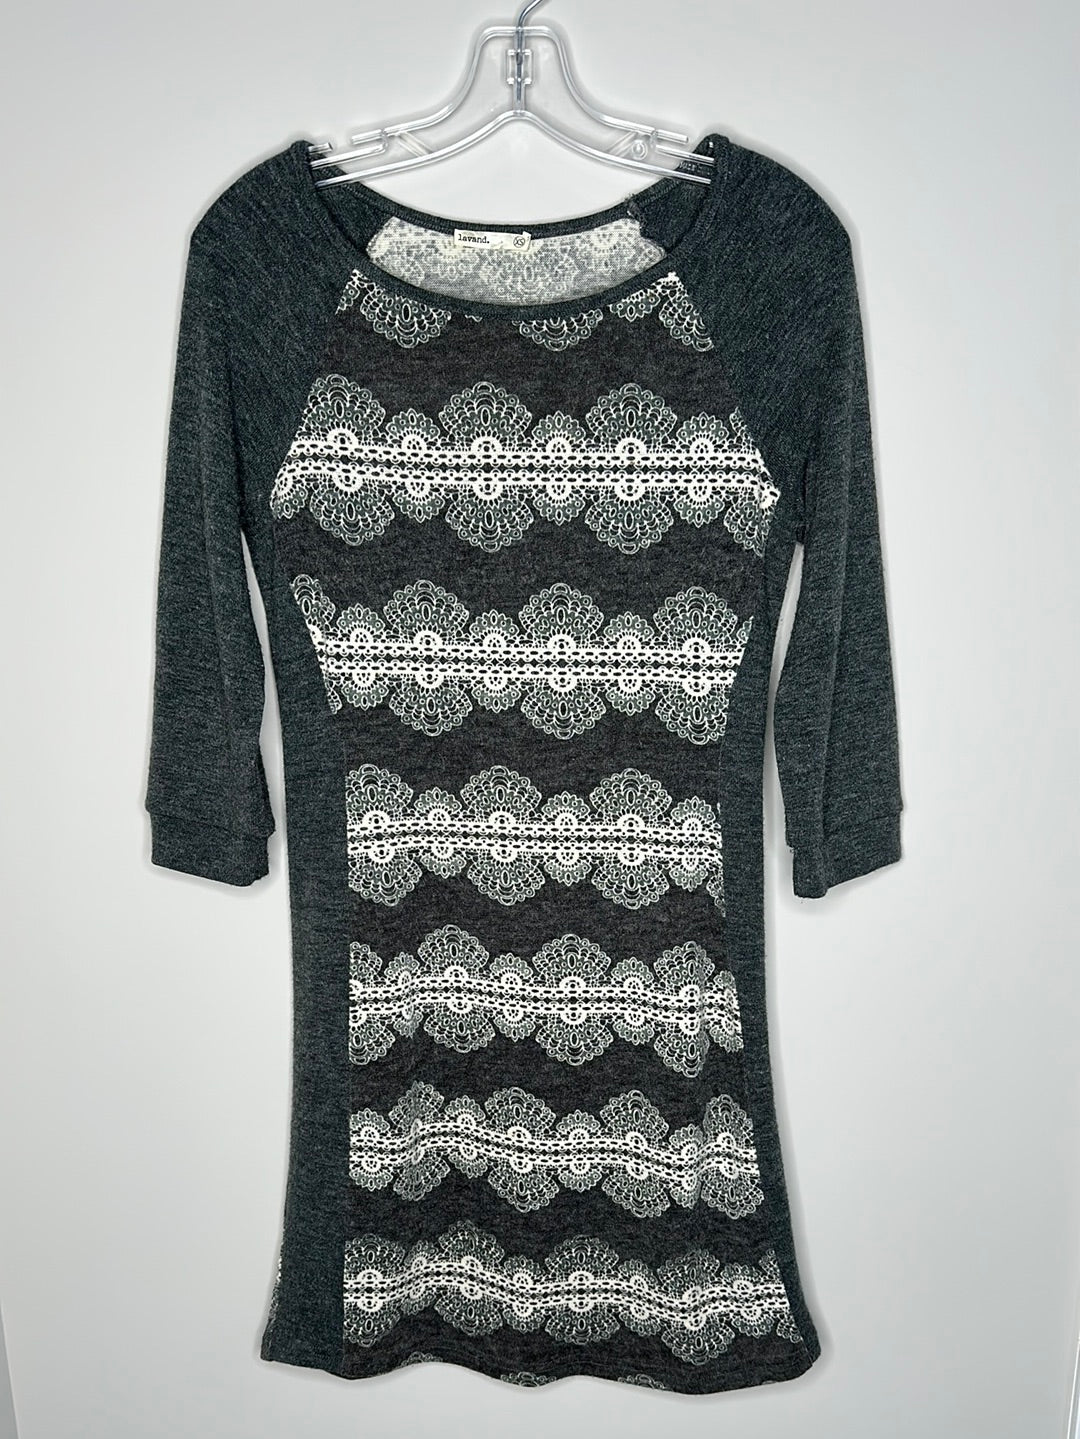 Lavand Size XS Gray & Ivory 3/4 Sleeve Dress